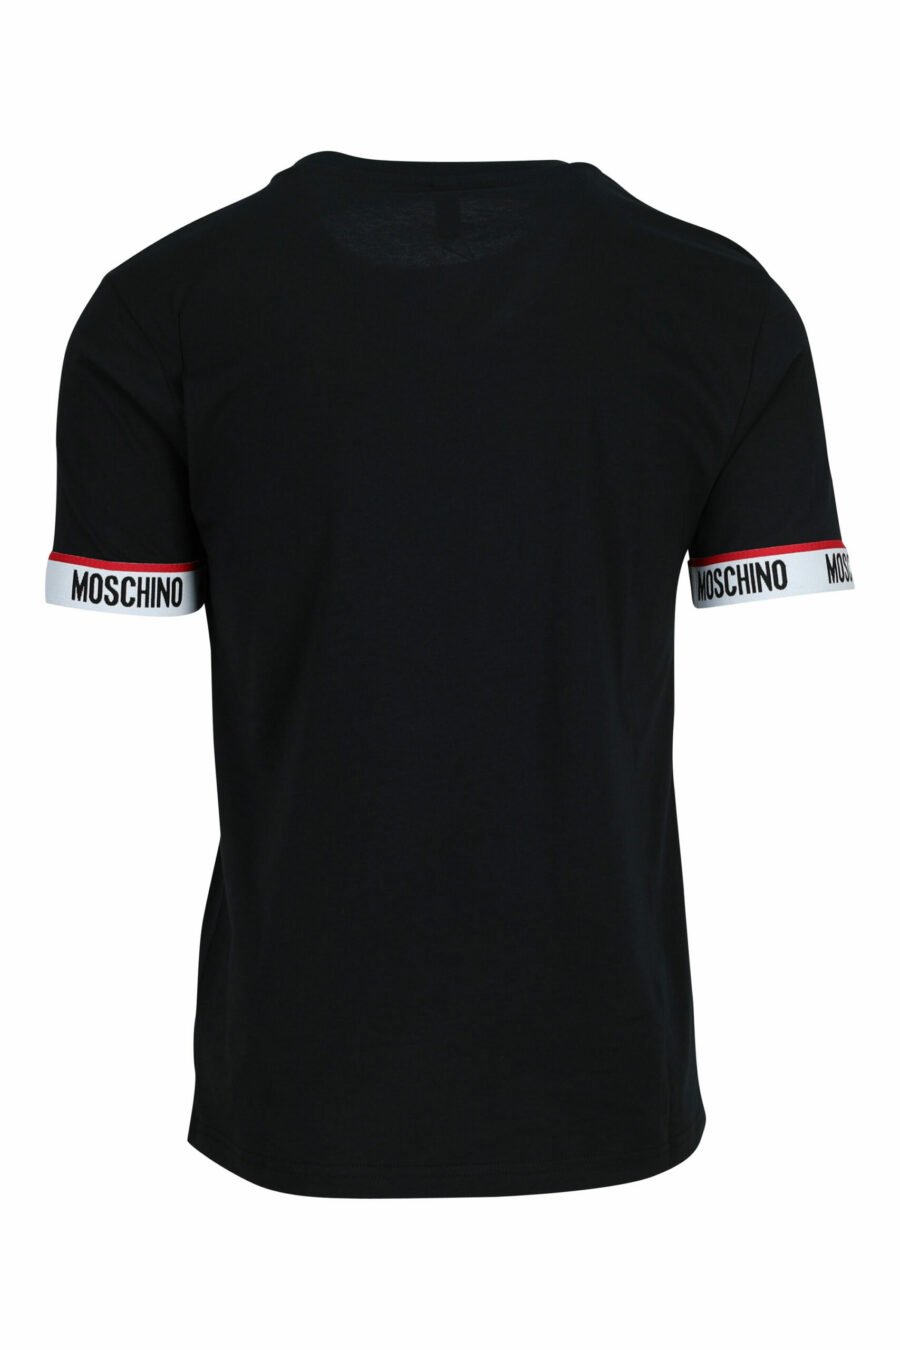 Camiseta negra con logo blanco en mangas - 667113604855 1 scaled